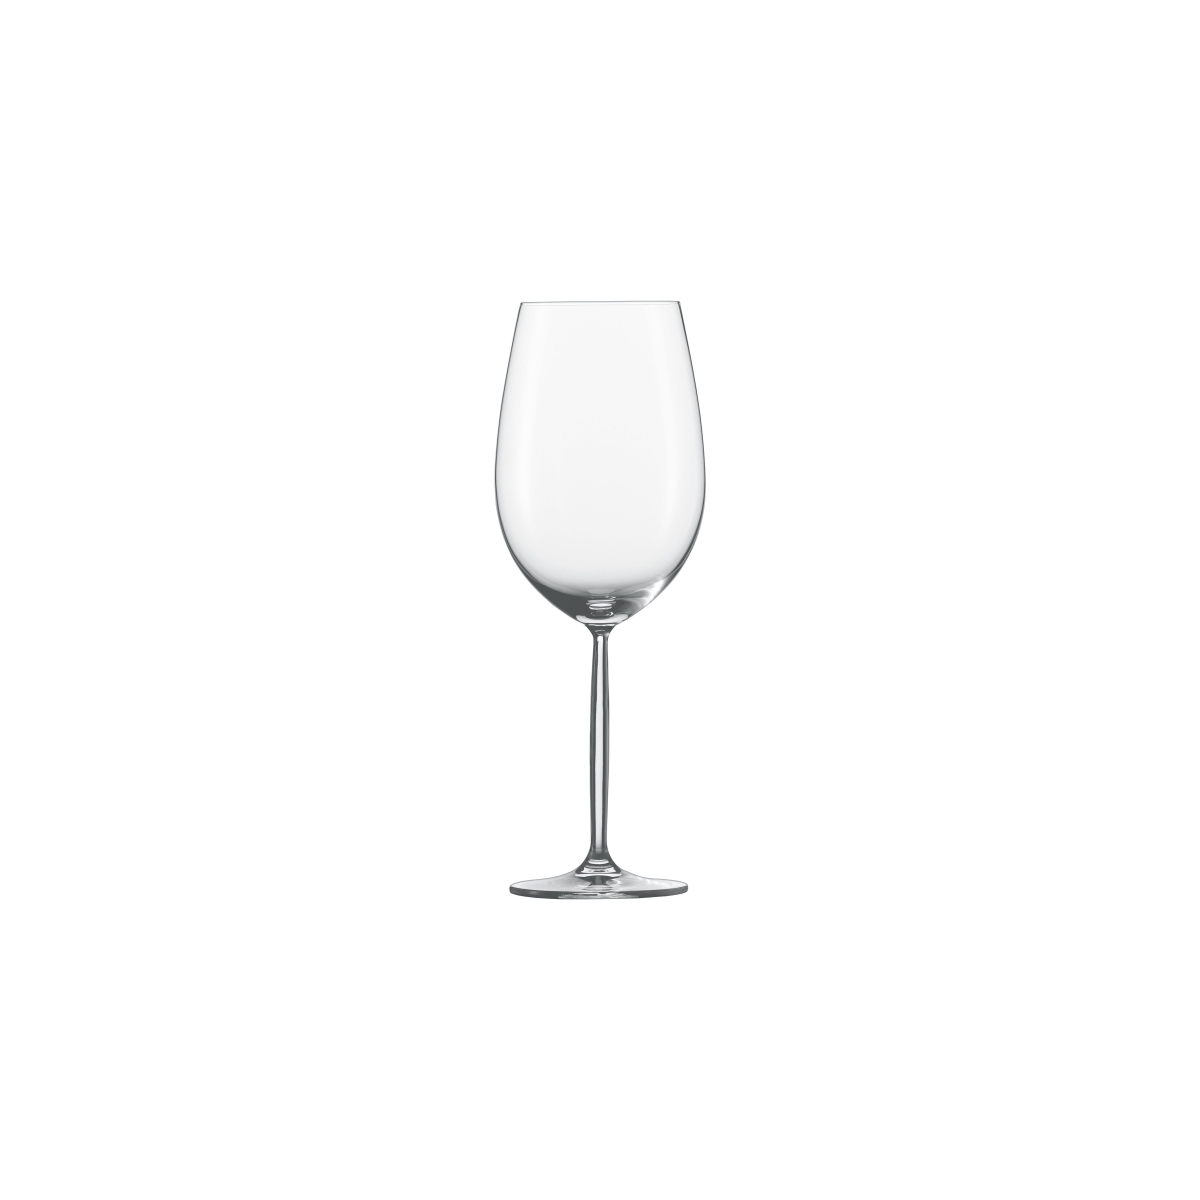 Pahar - pocal vin Bordeaux, capacitatea de 768ml, diametru 99mm, inaltime 275mm